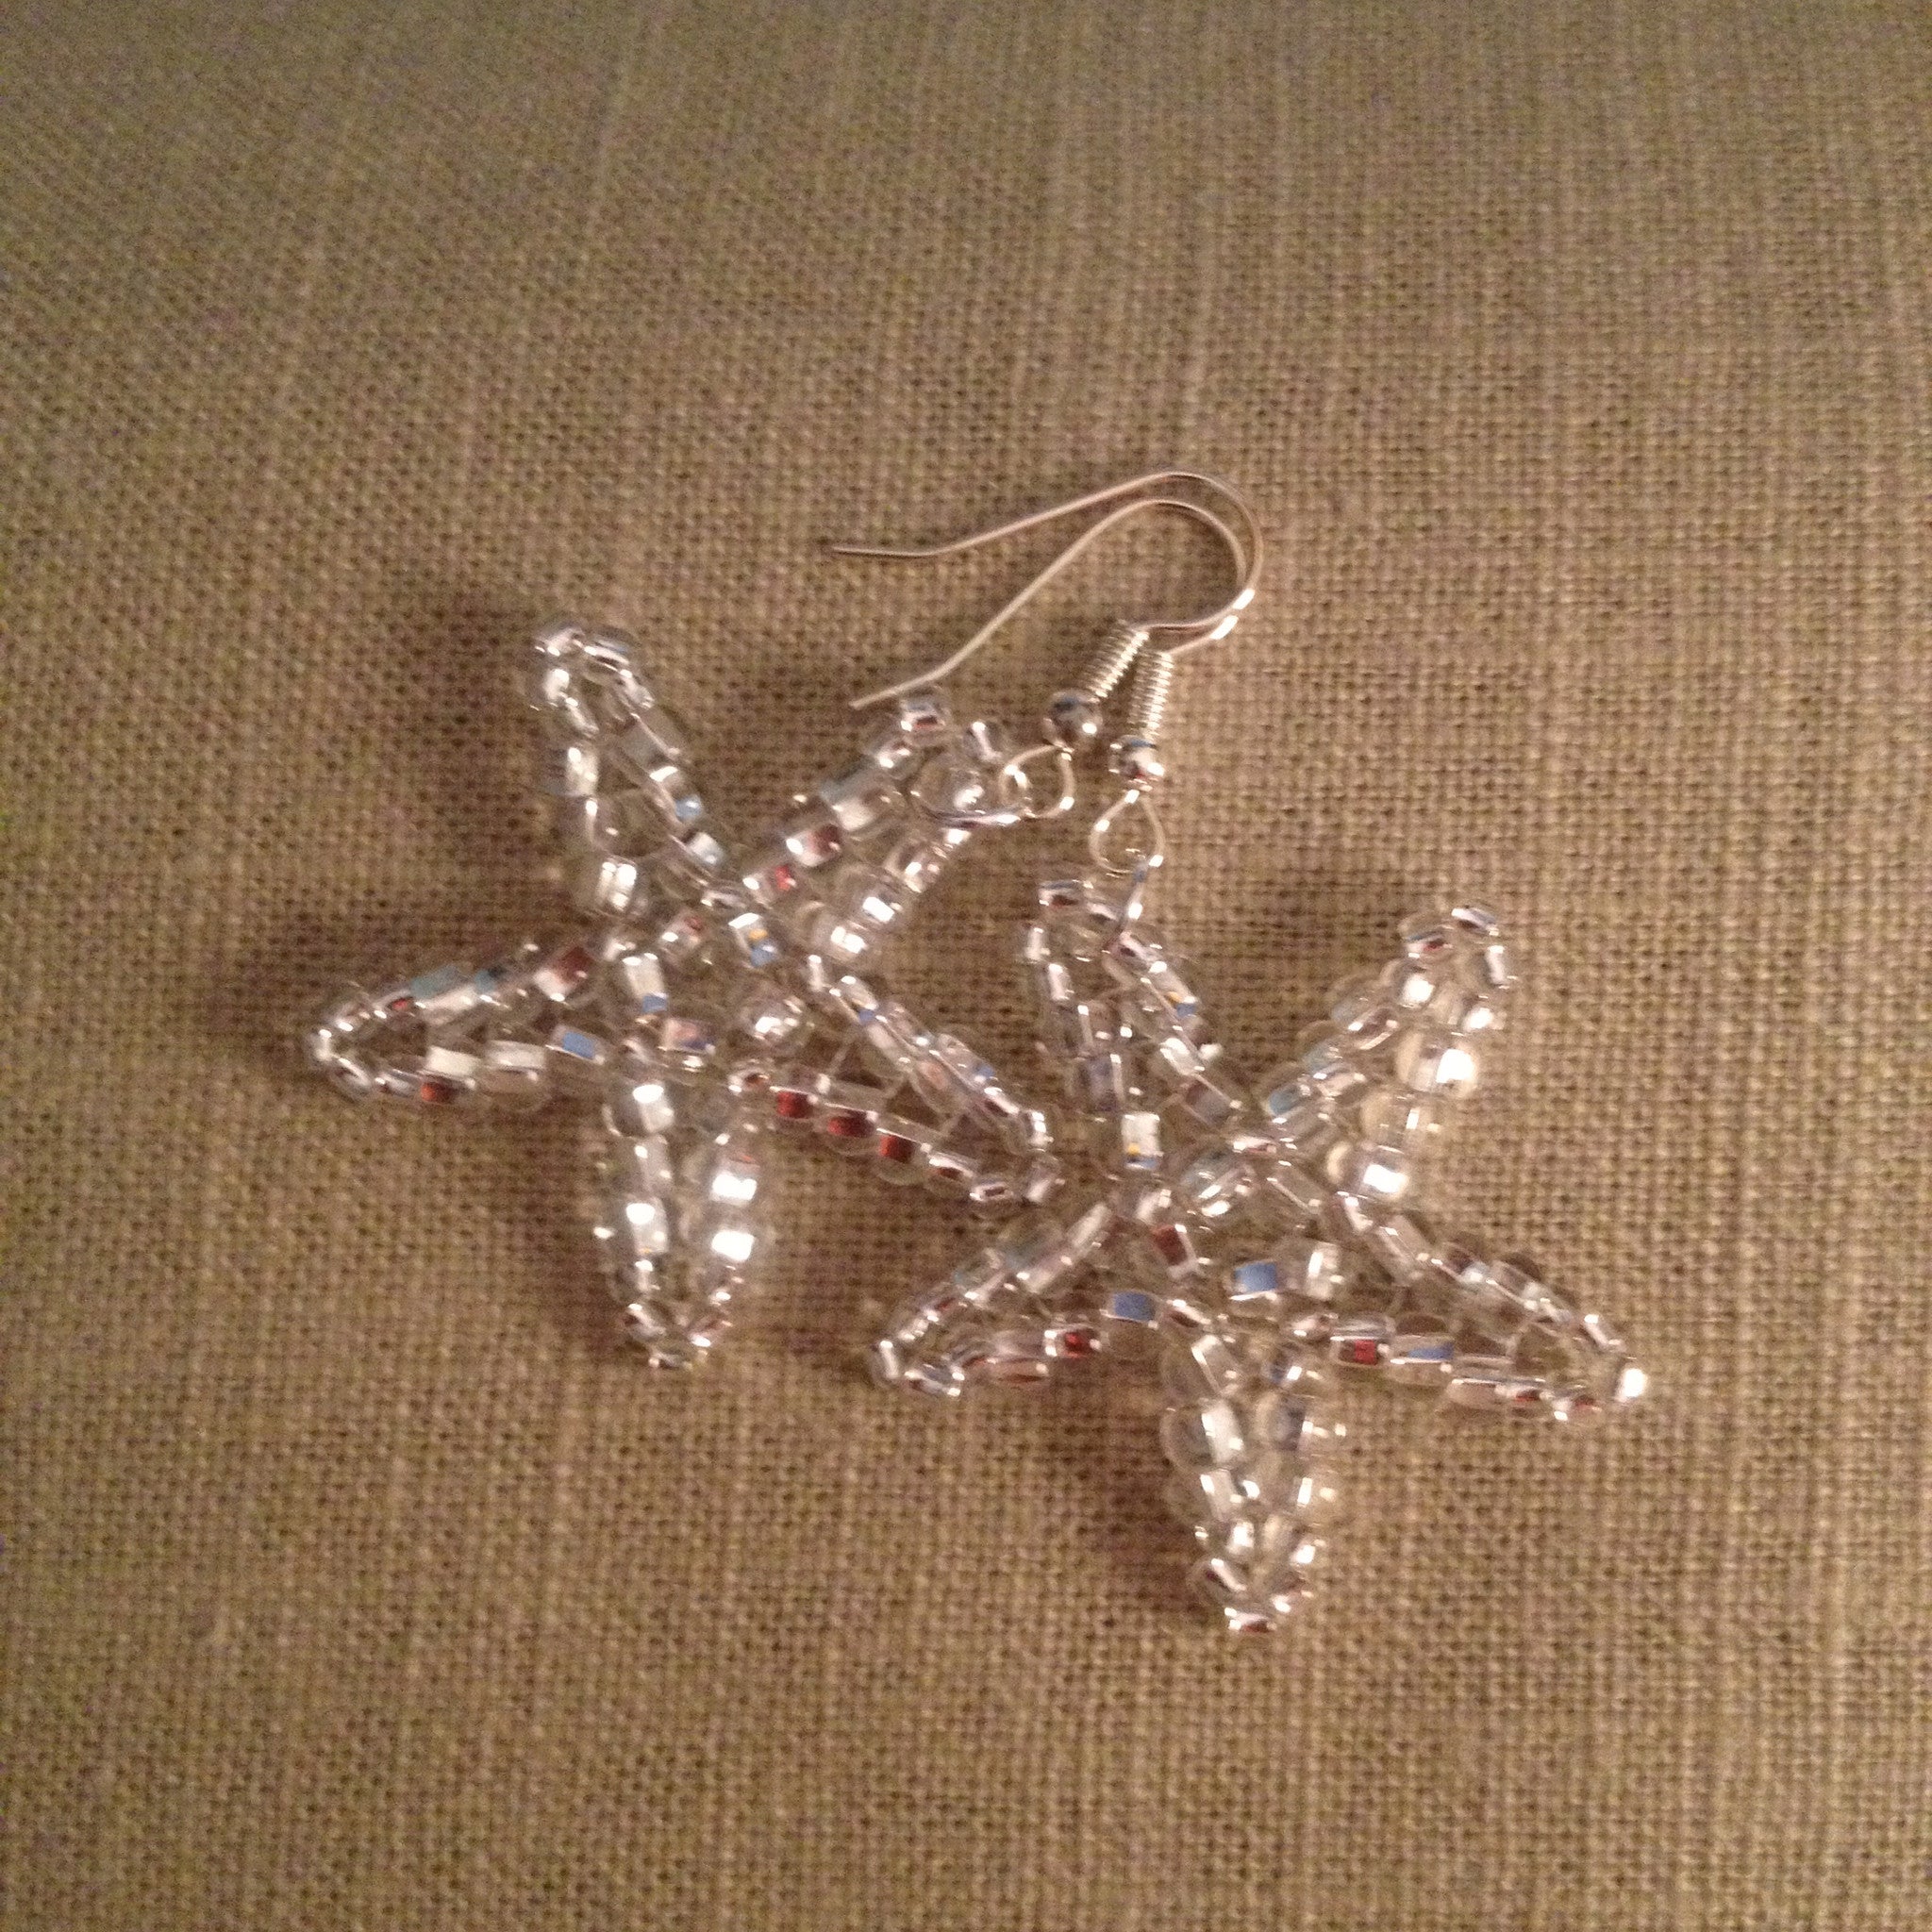 Starfish beaded handmade earrings in shiny silver clear resort cruise wear style beachy fun